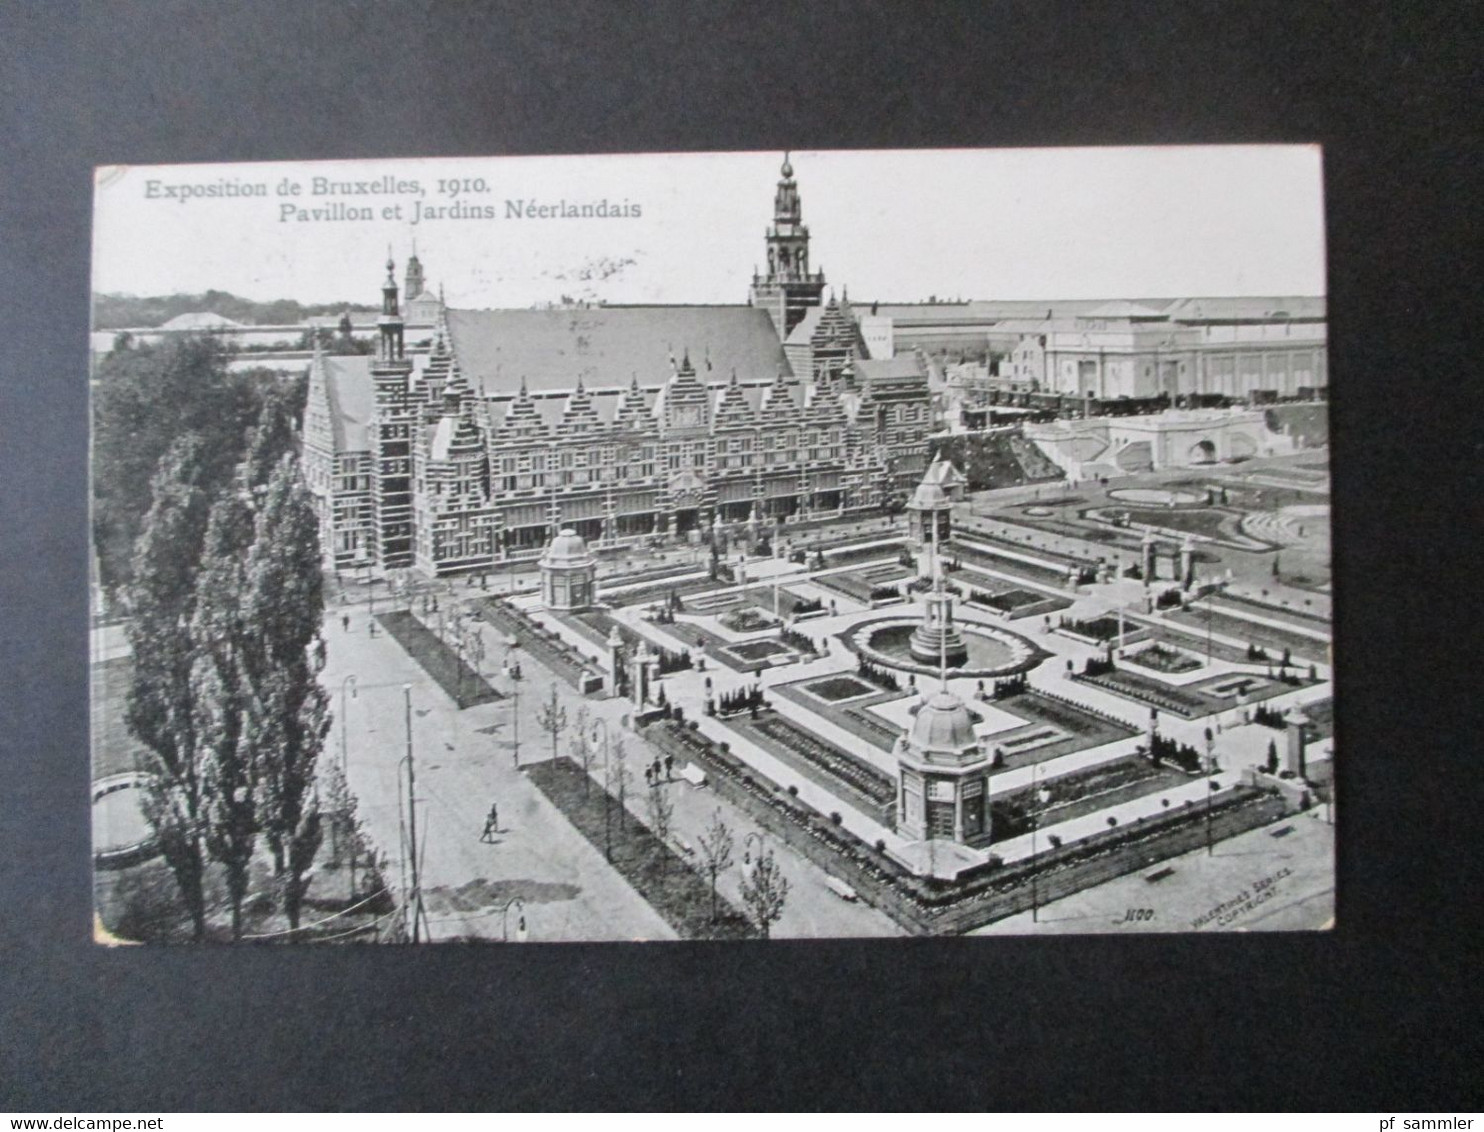 AK 1910 Belgien Exposition De Bruxelles Pavillon Et Jardins Neerlandais Mit Vignette Und Stempel Der Ausstellung - Ausstellungen